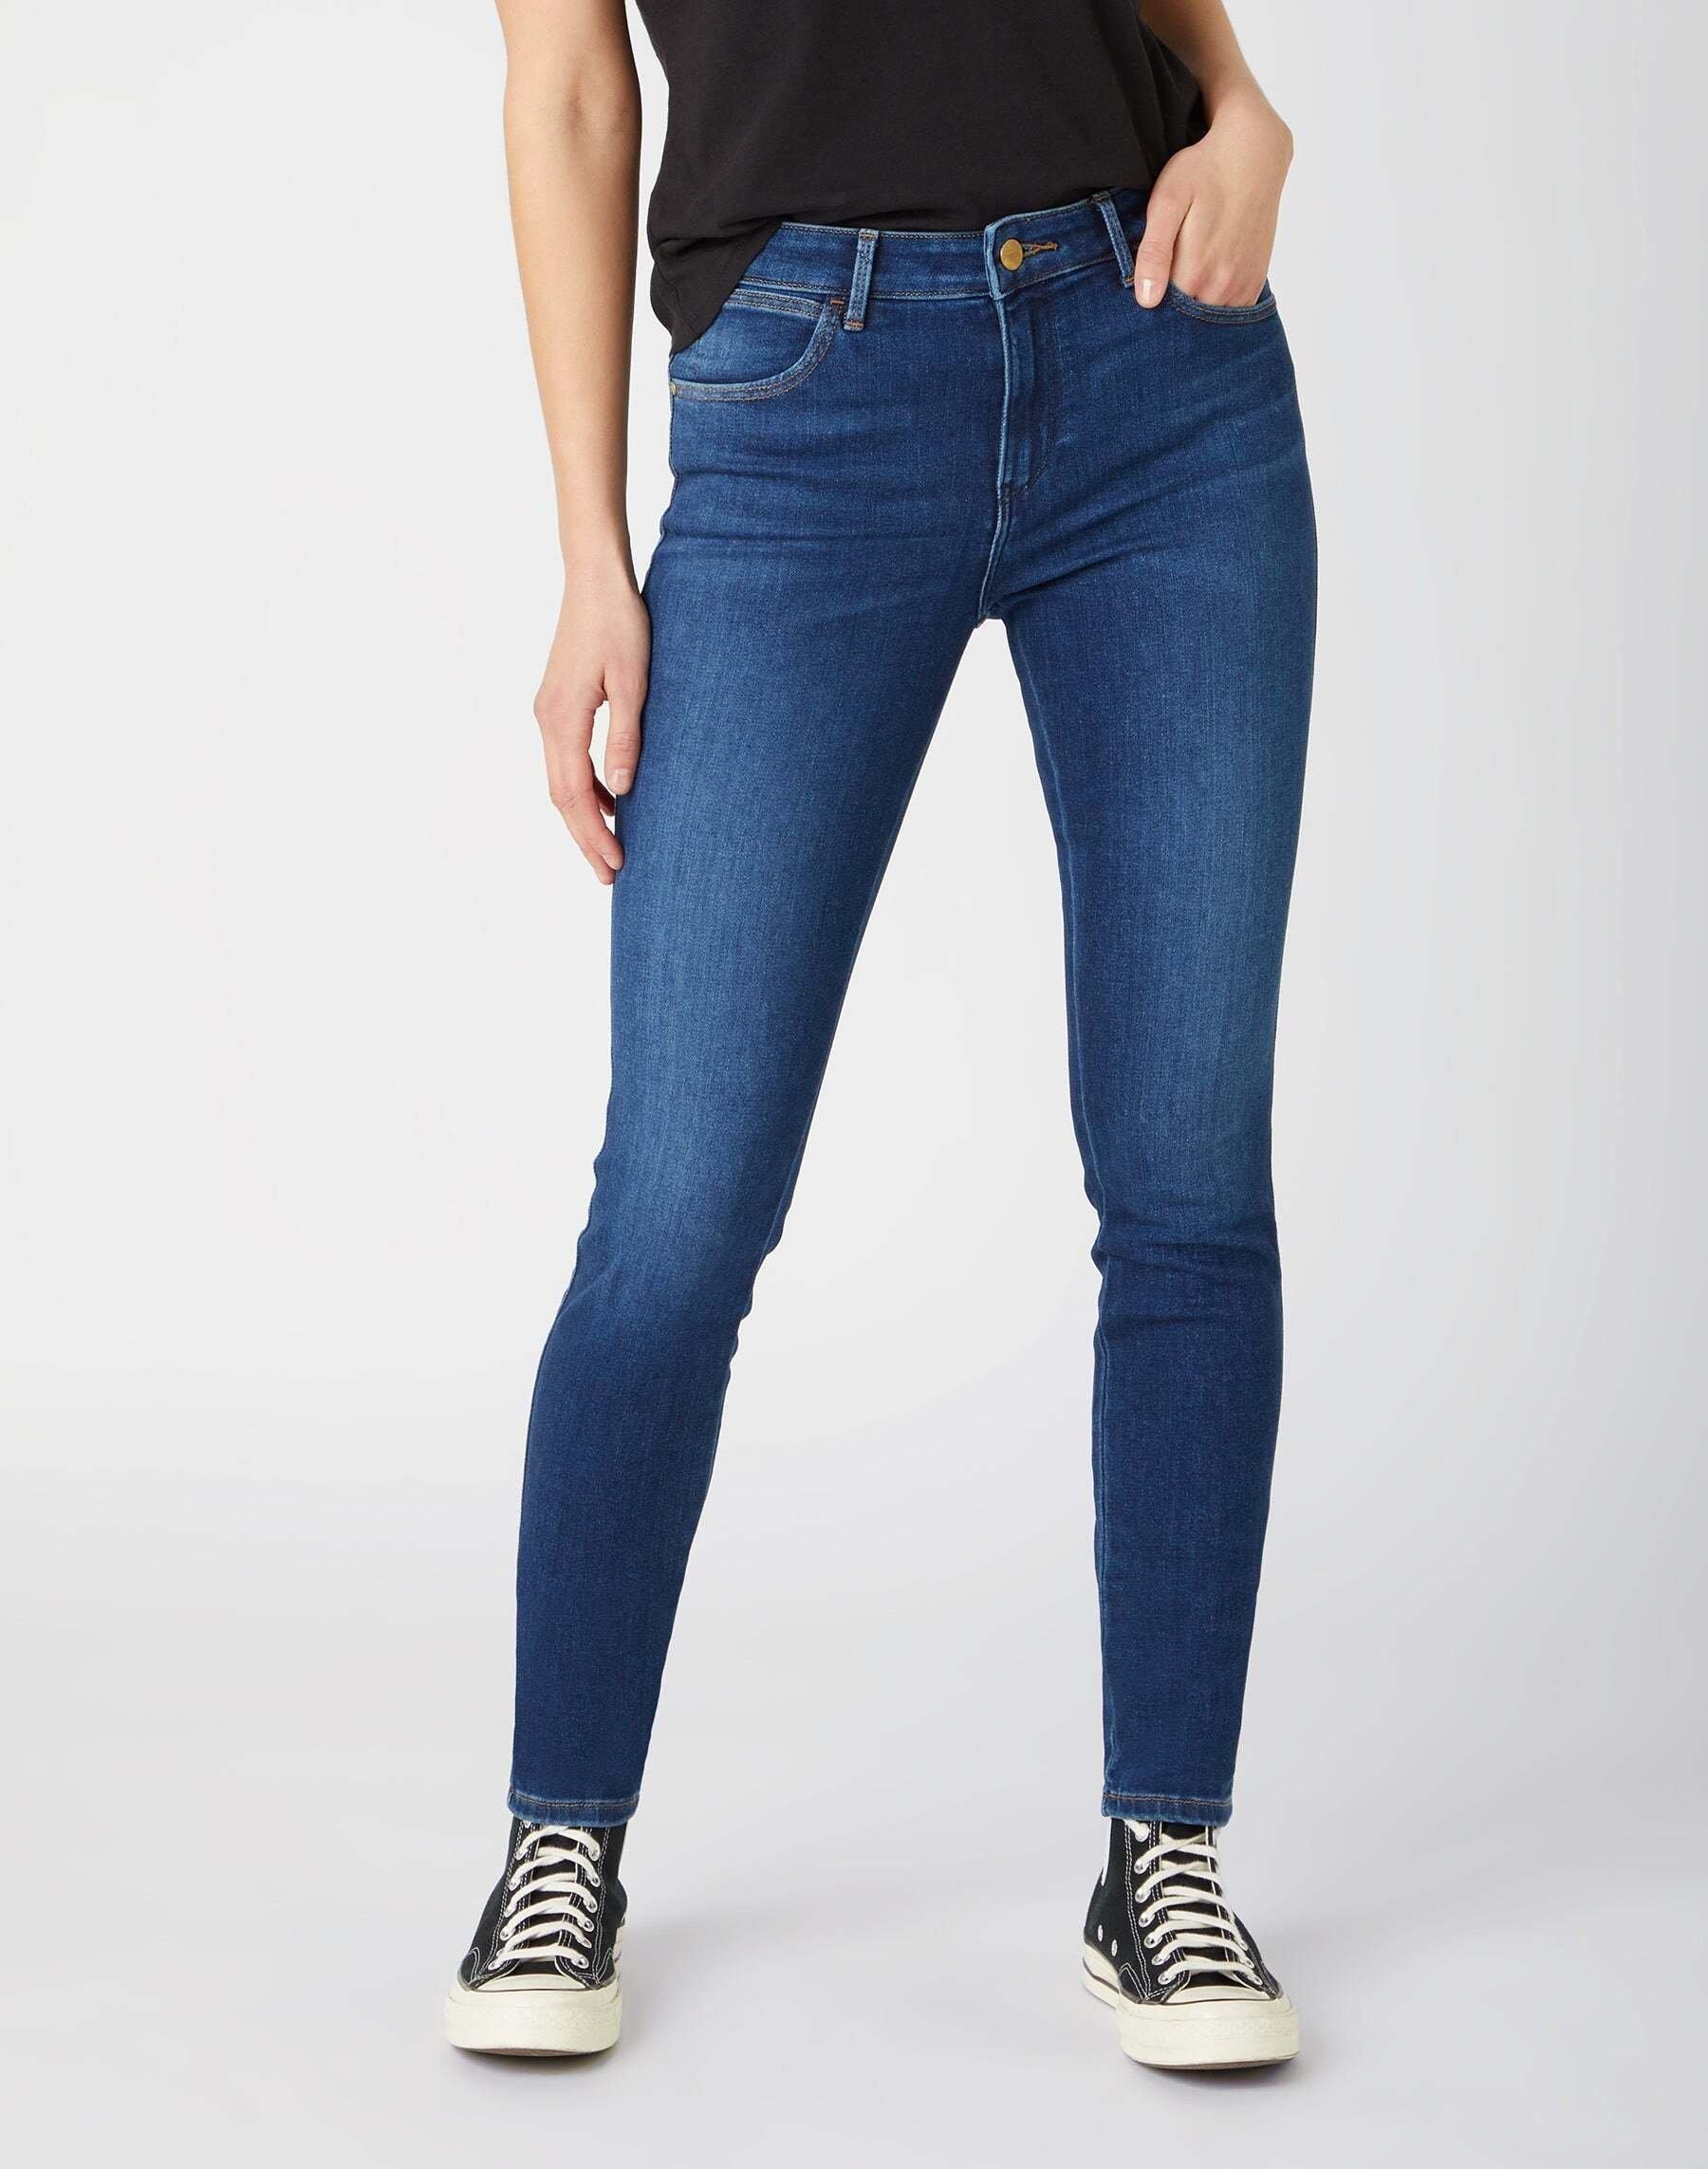 Jeans Skinny Fit Skinny Damen Blau Denim L32/W24 von Wrangler